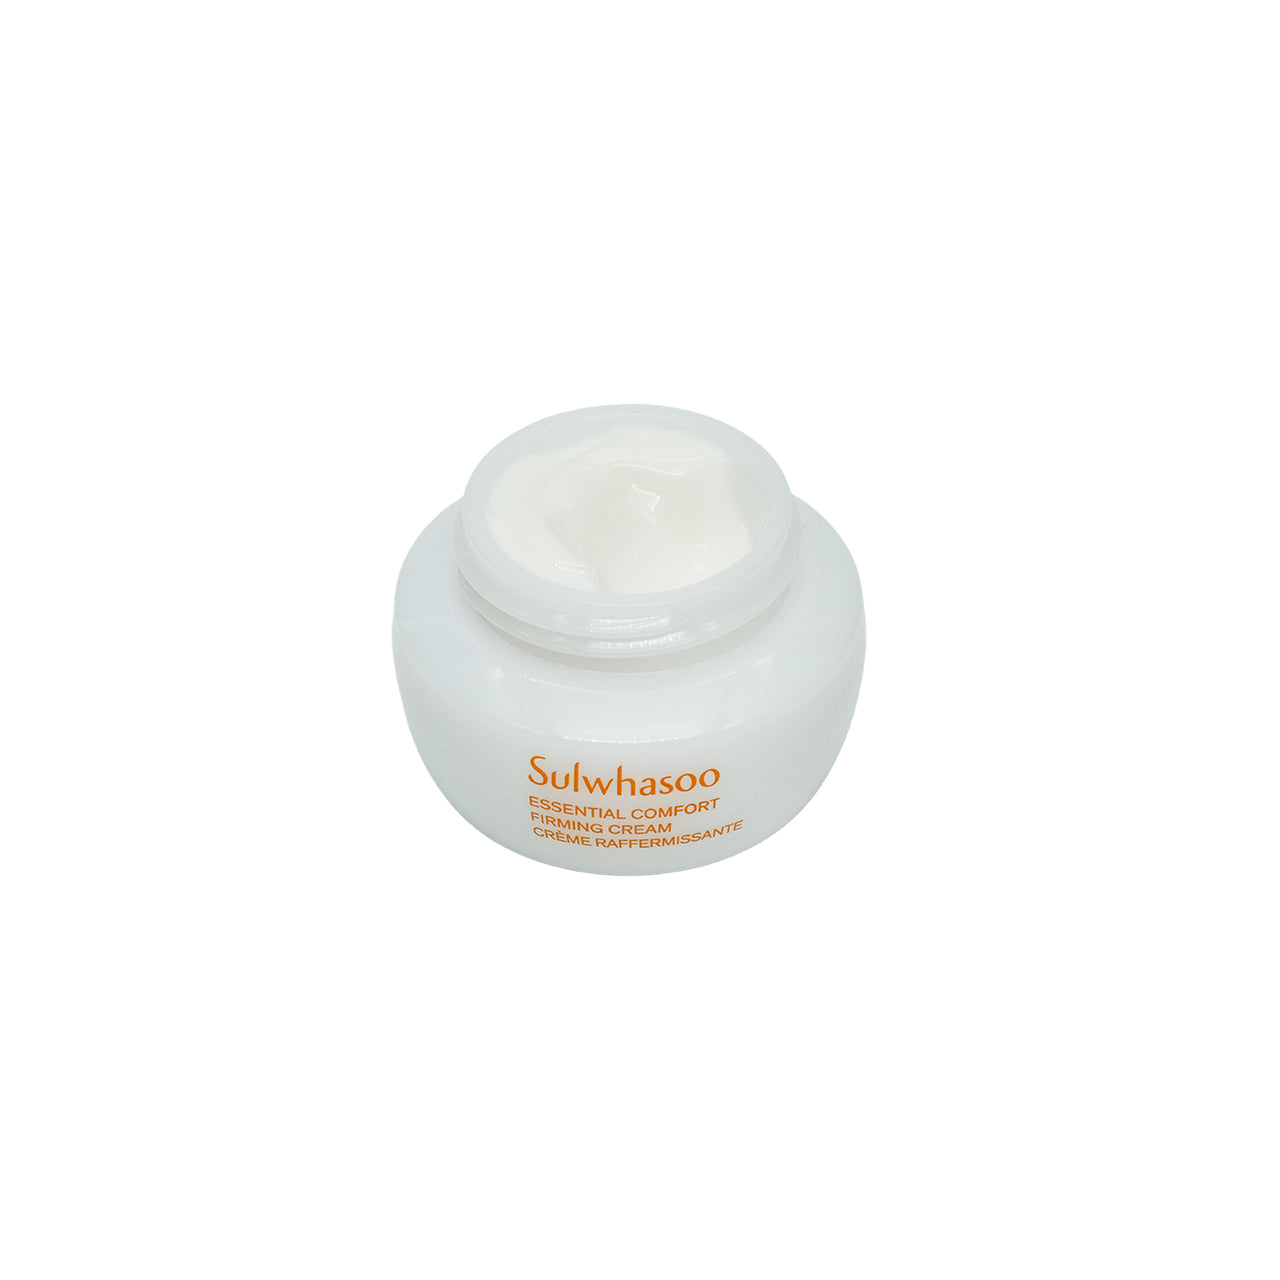 Sulwhasoo Essential Comfort Firming Cream 5ml | Sasa Global eShop